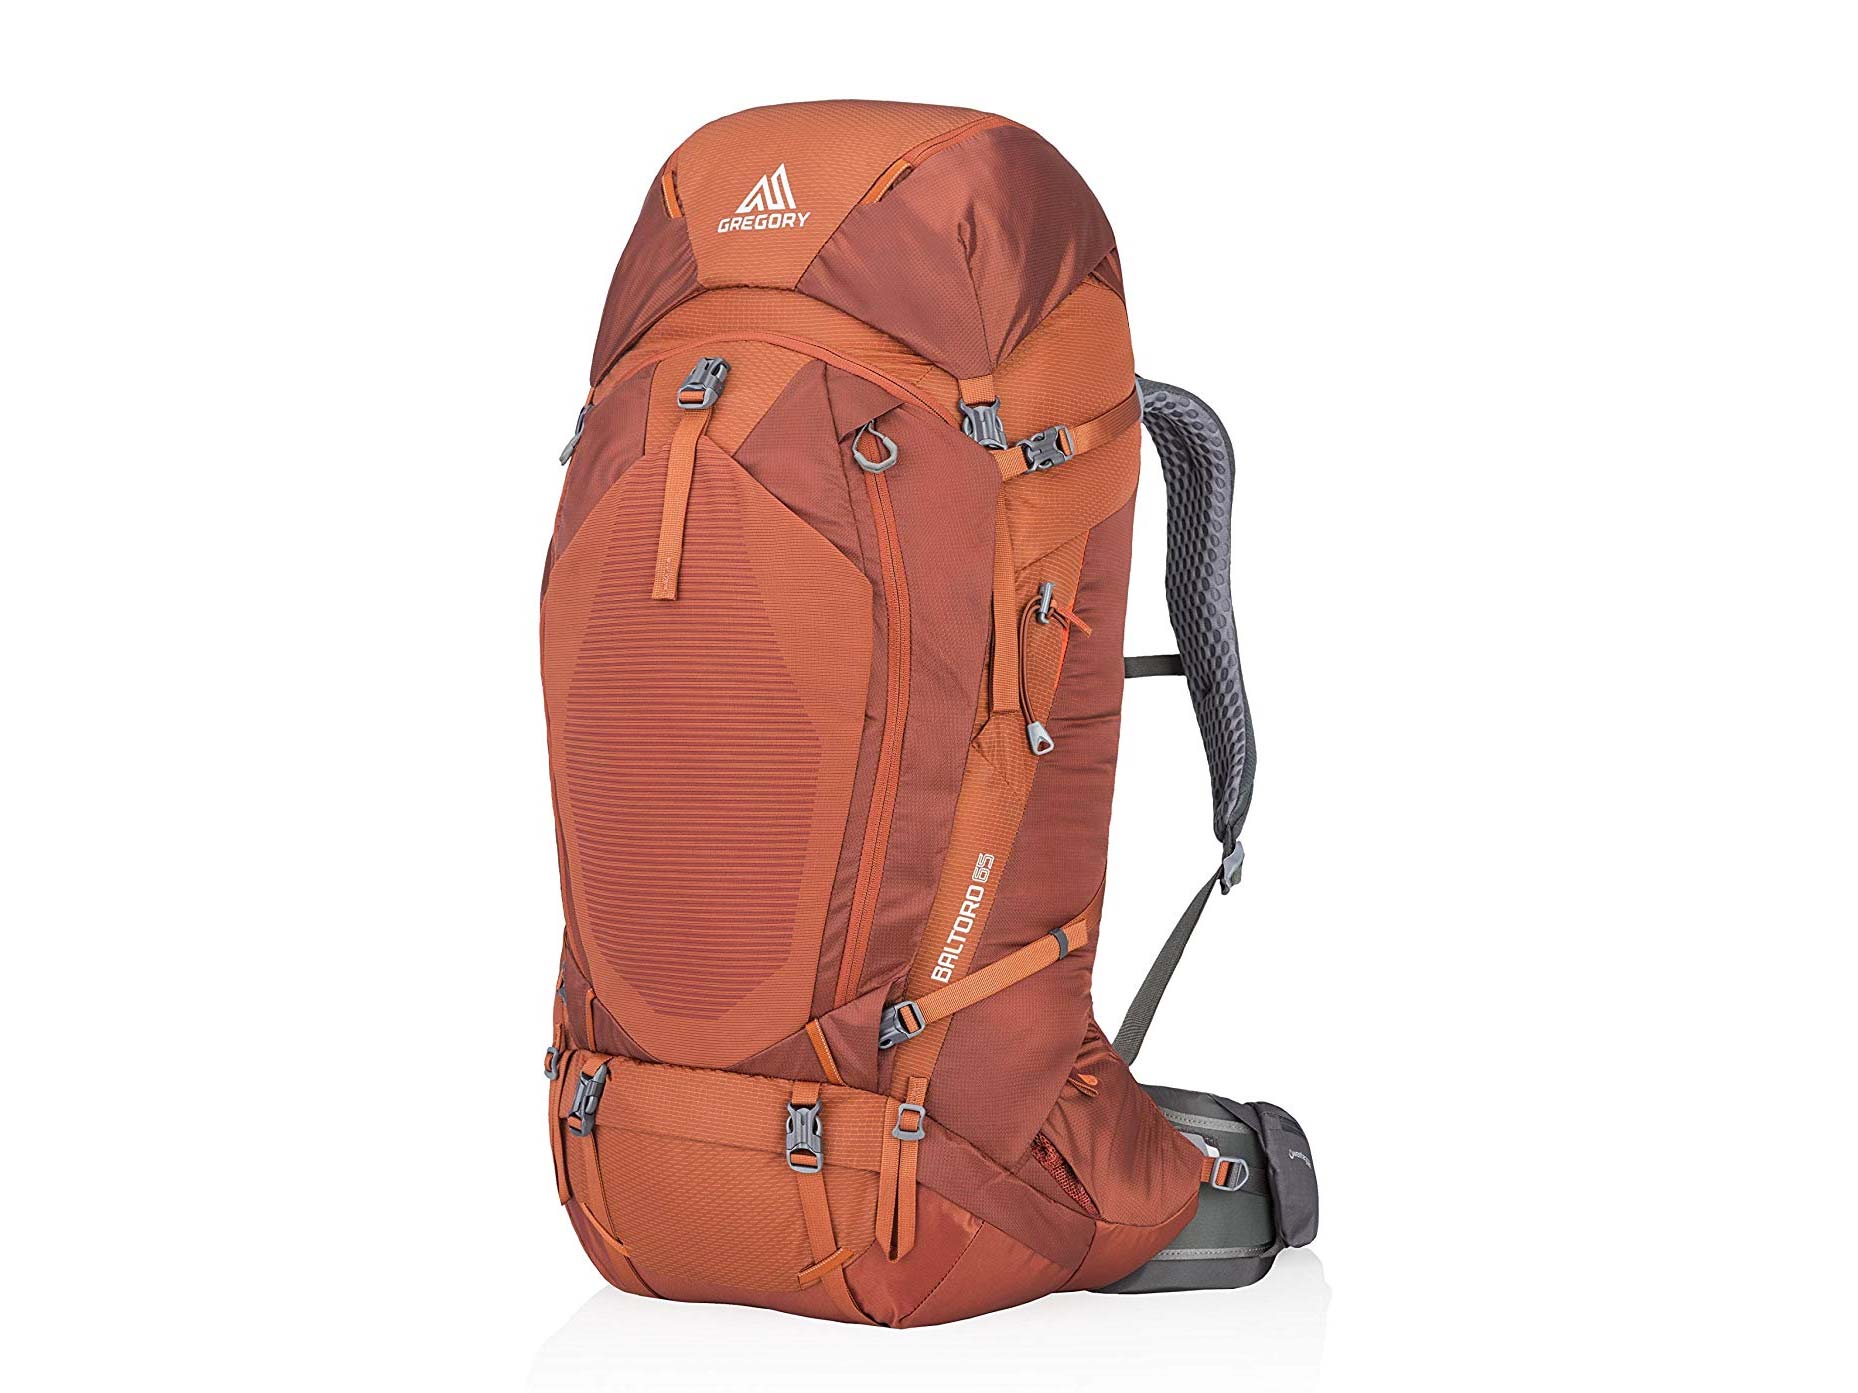 Orange backpack